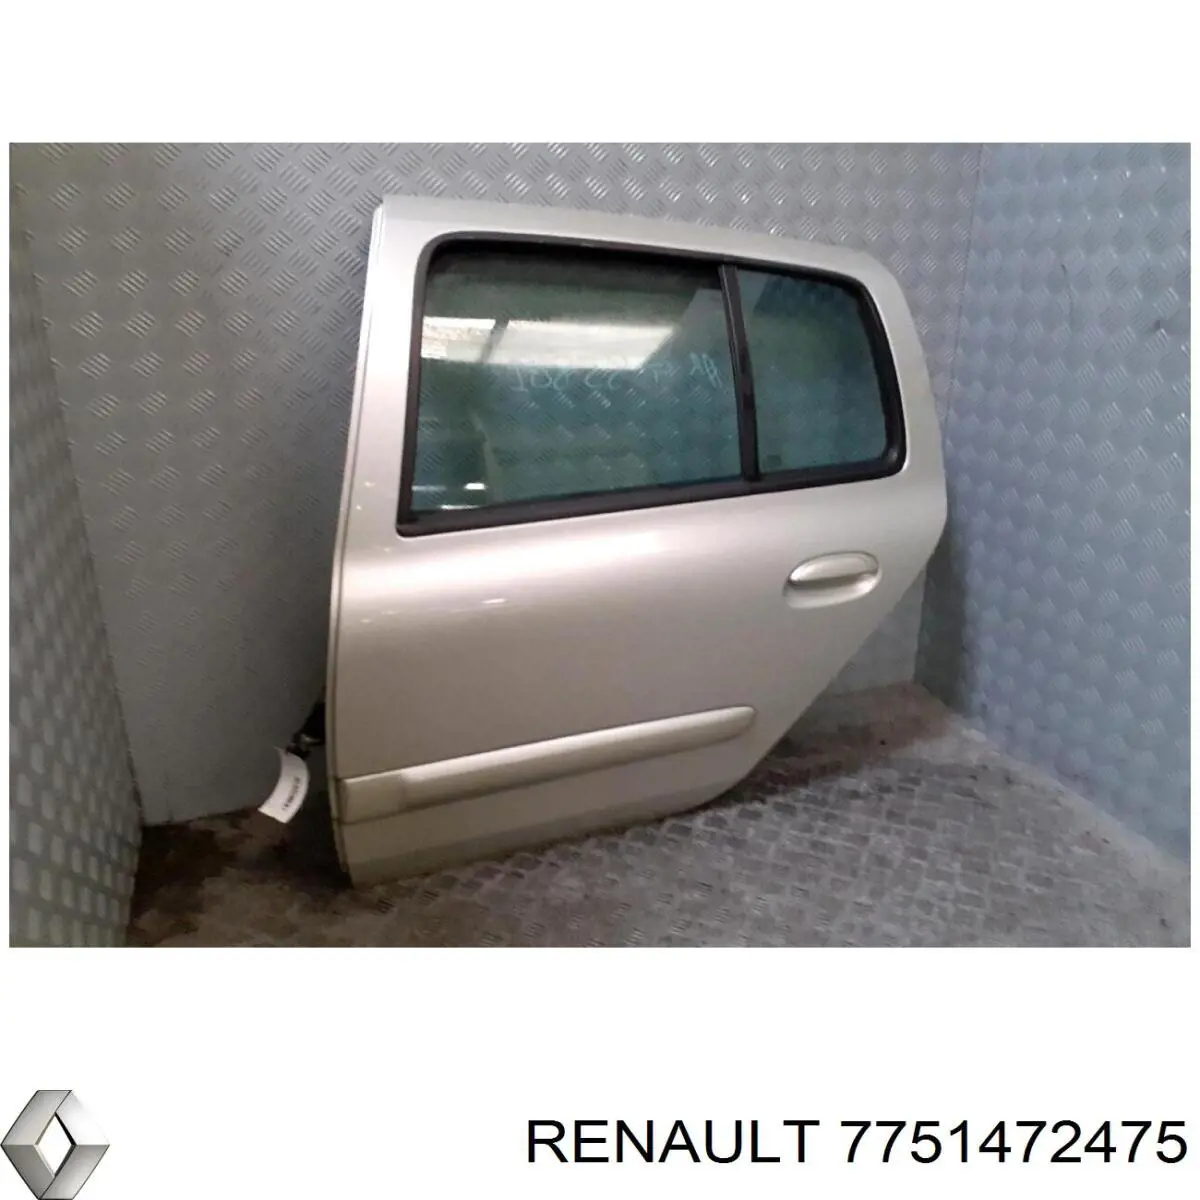 7751472475 Renault (RVI) puerta trasera izquierda